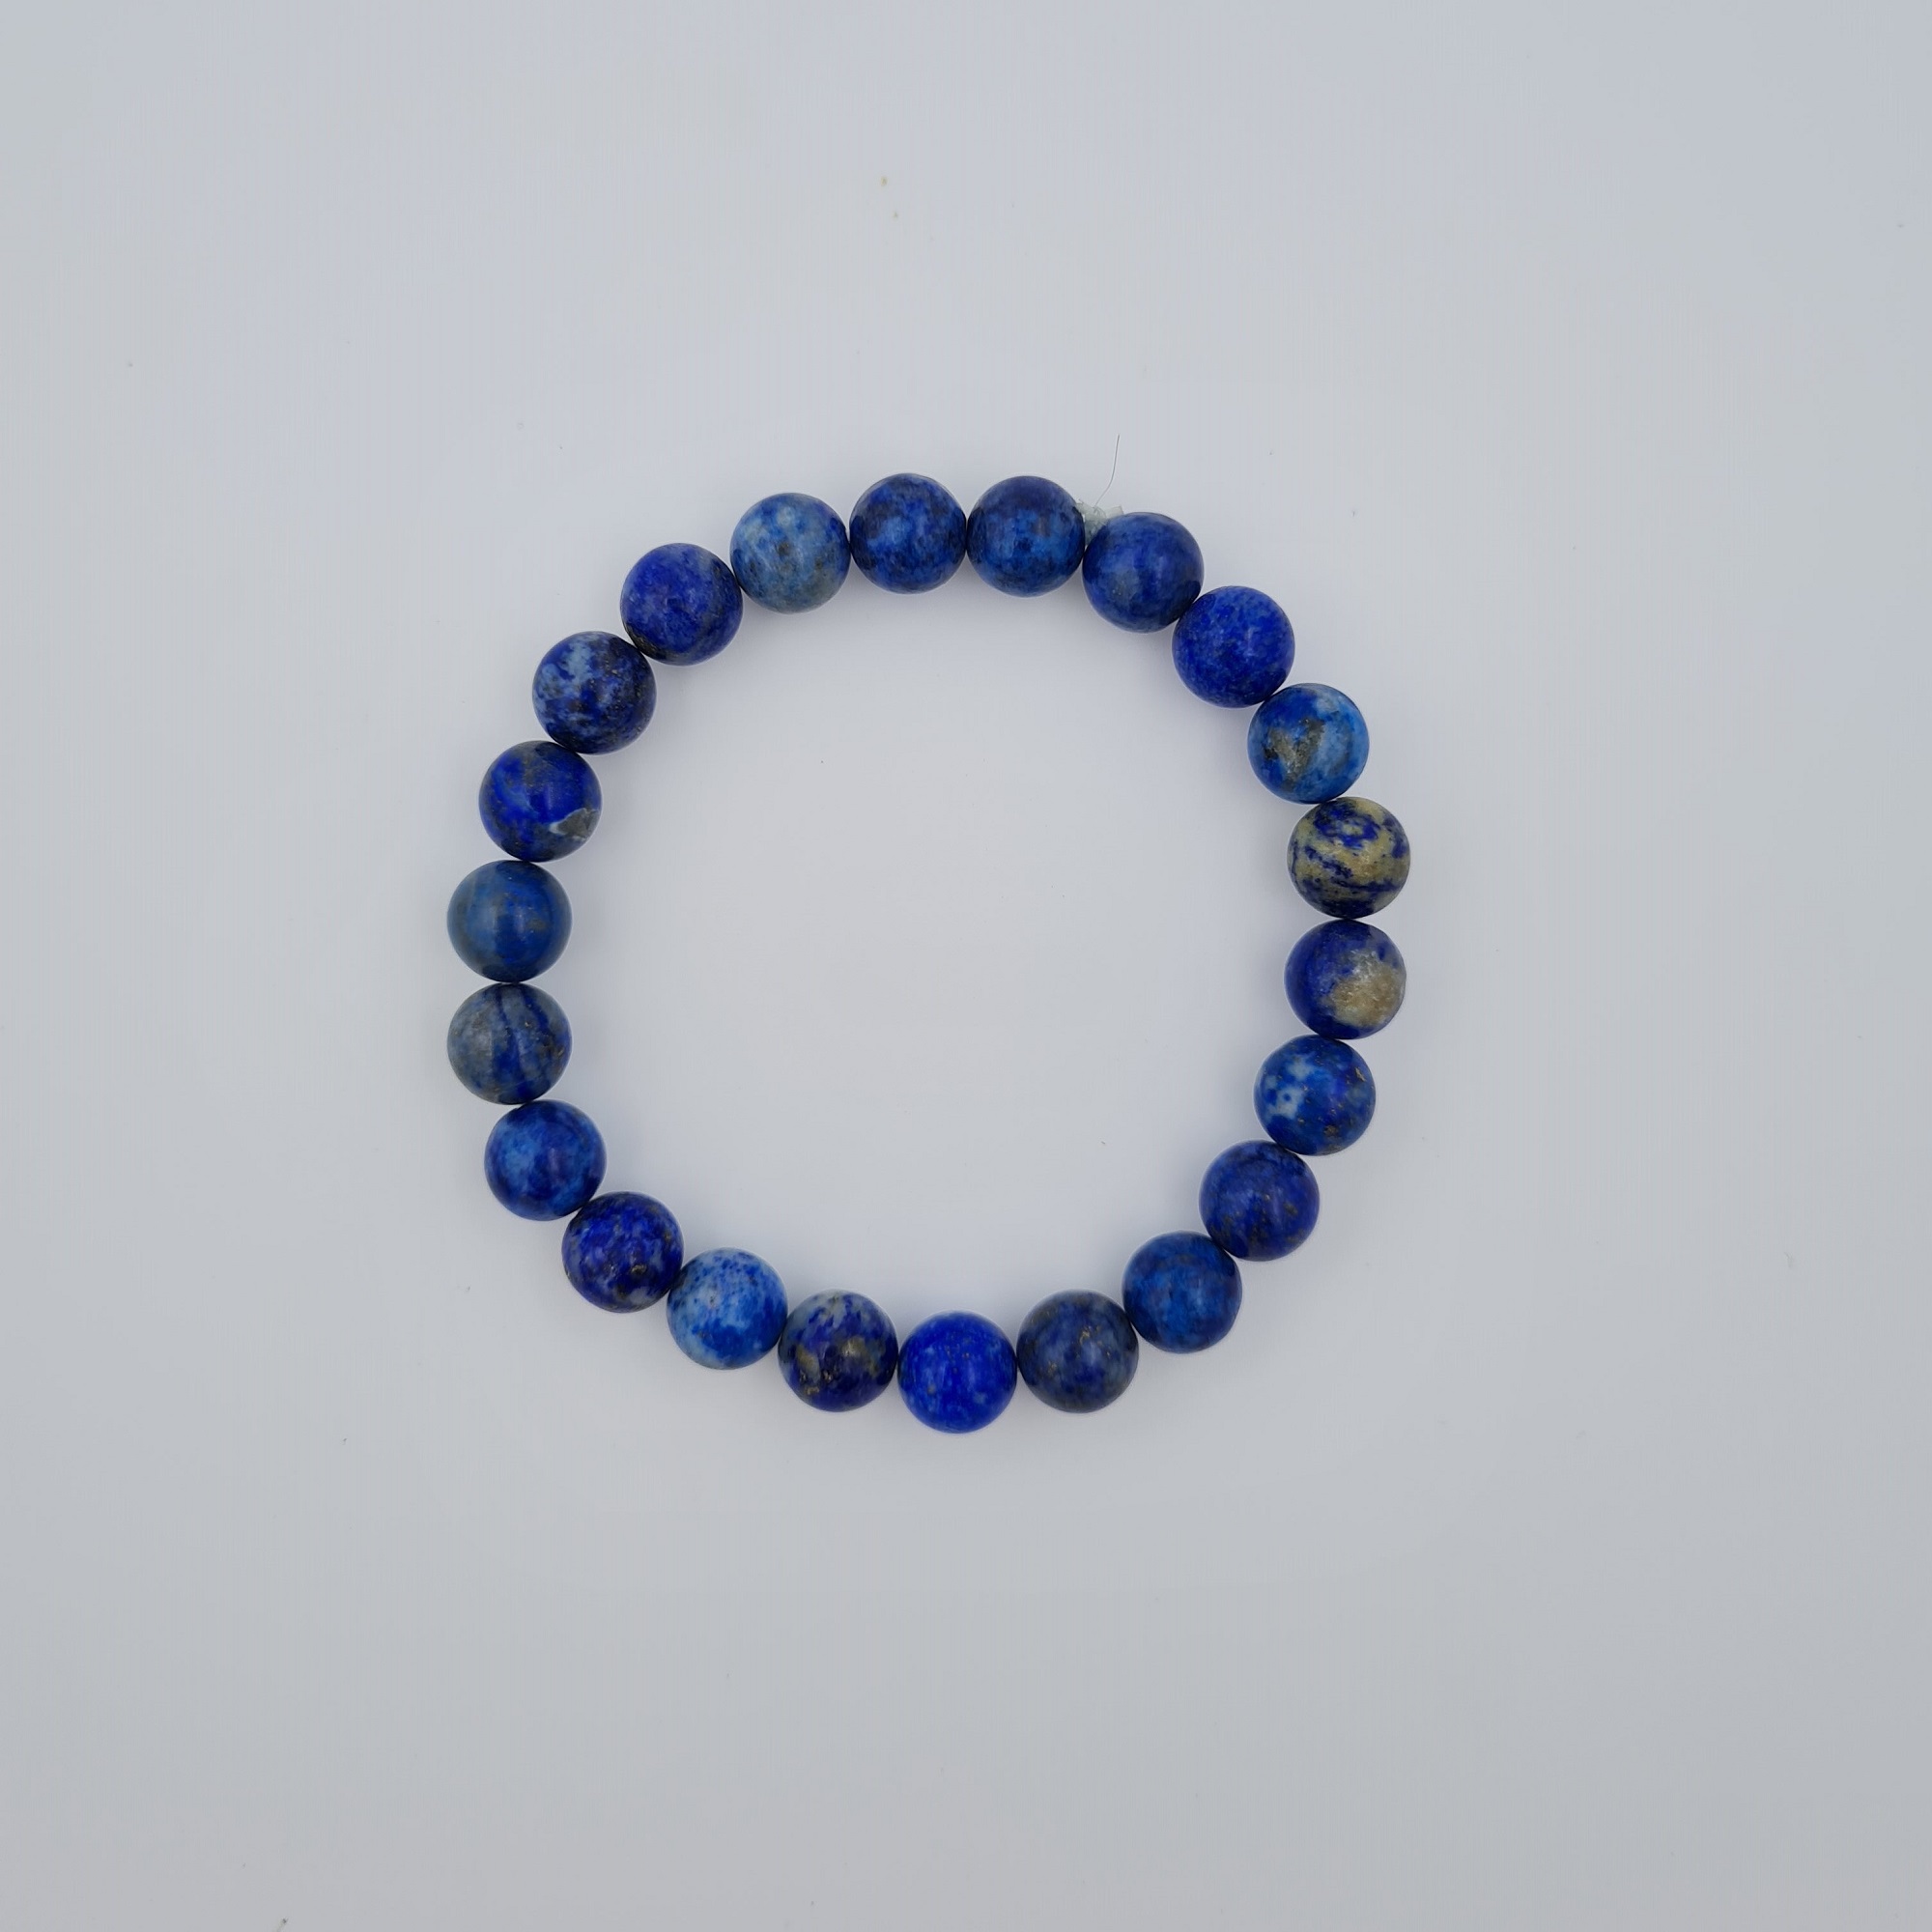 Lapis Lazuli Bracelet for Healing and Balance - 4mm Beads